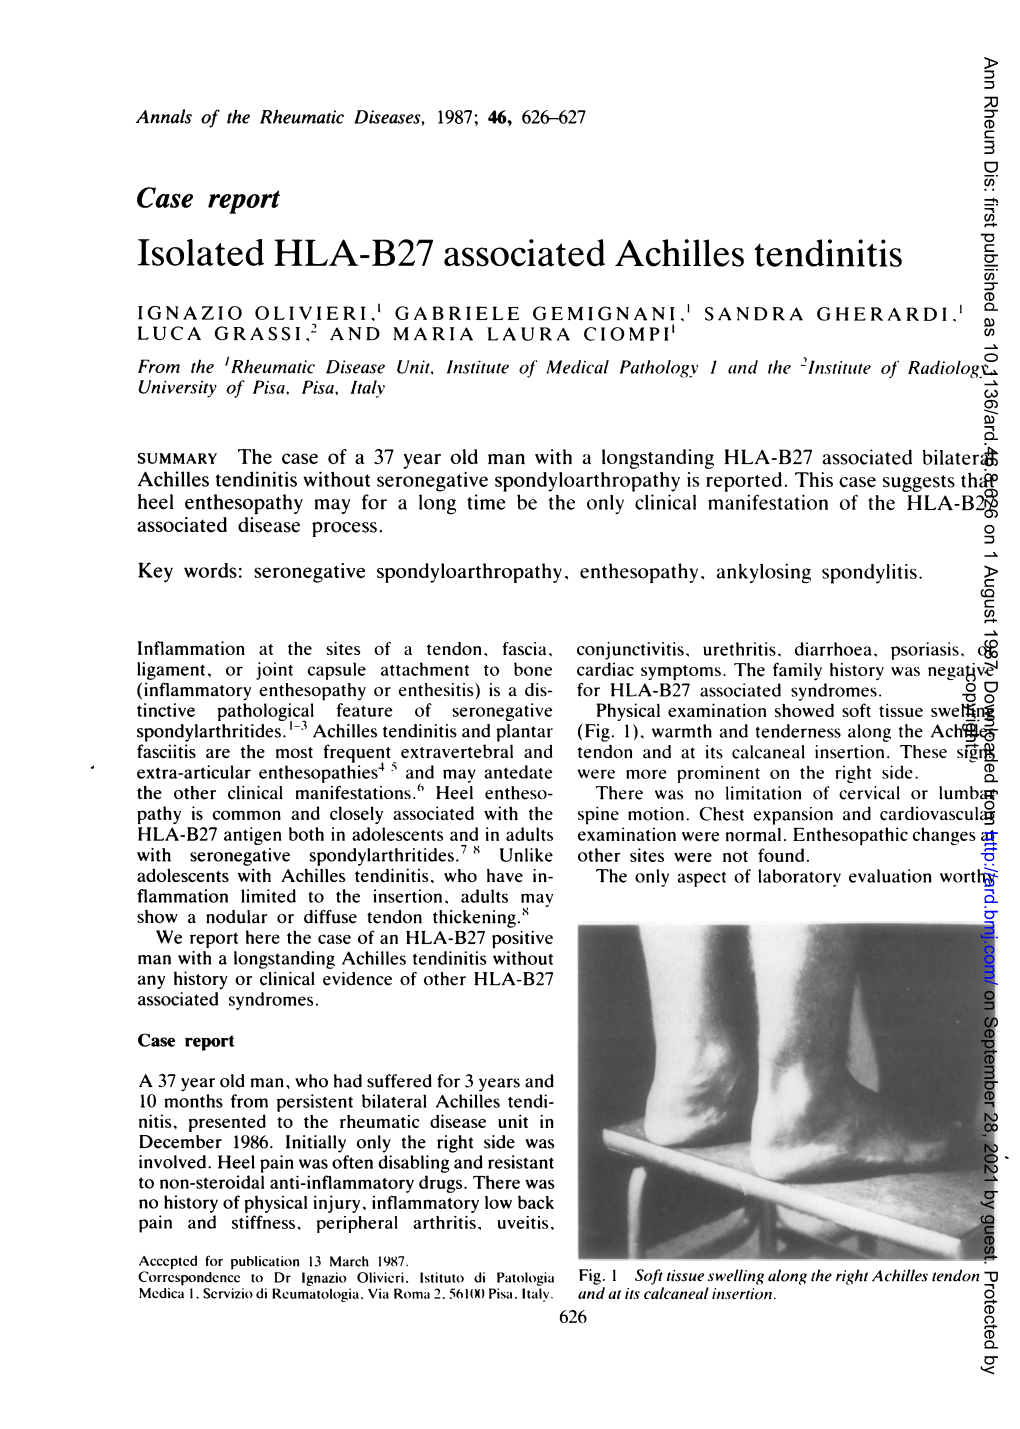 Isolated HLA-B27 Associated Achilles Tendinitis